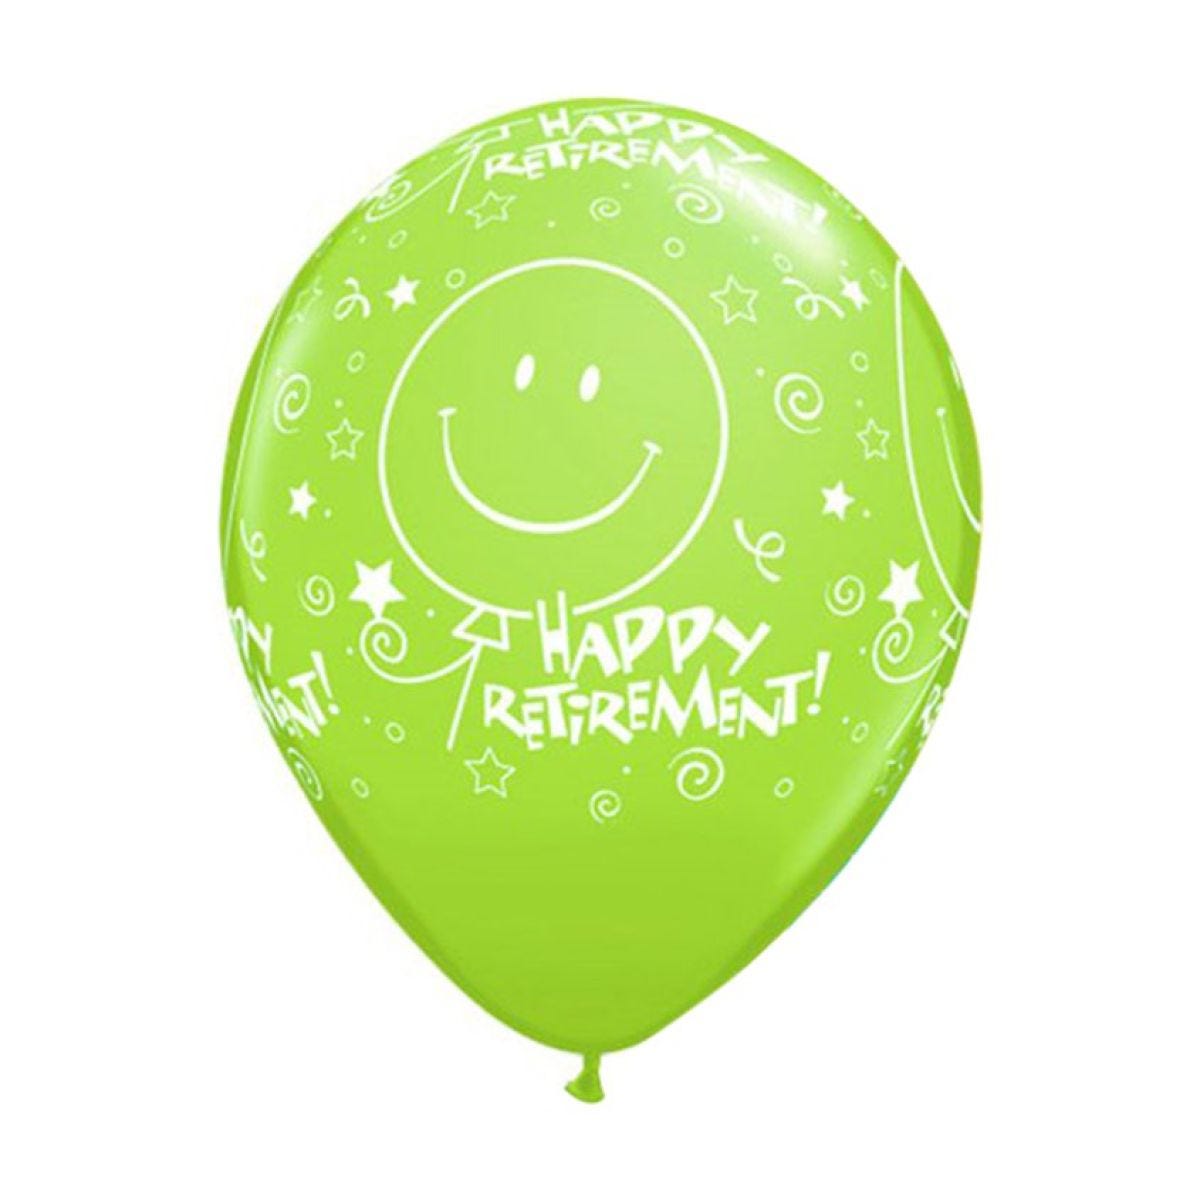 Retirement! Smile Face Balloons Assortment - 11" Latex (6pk)